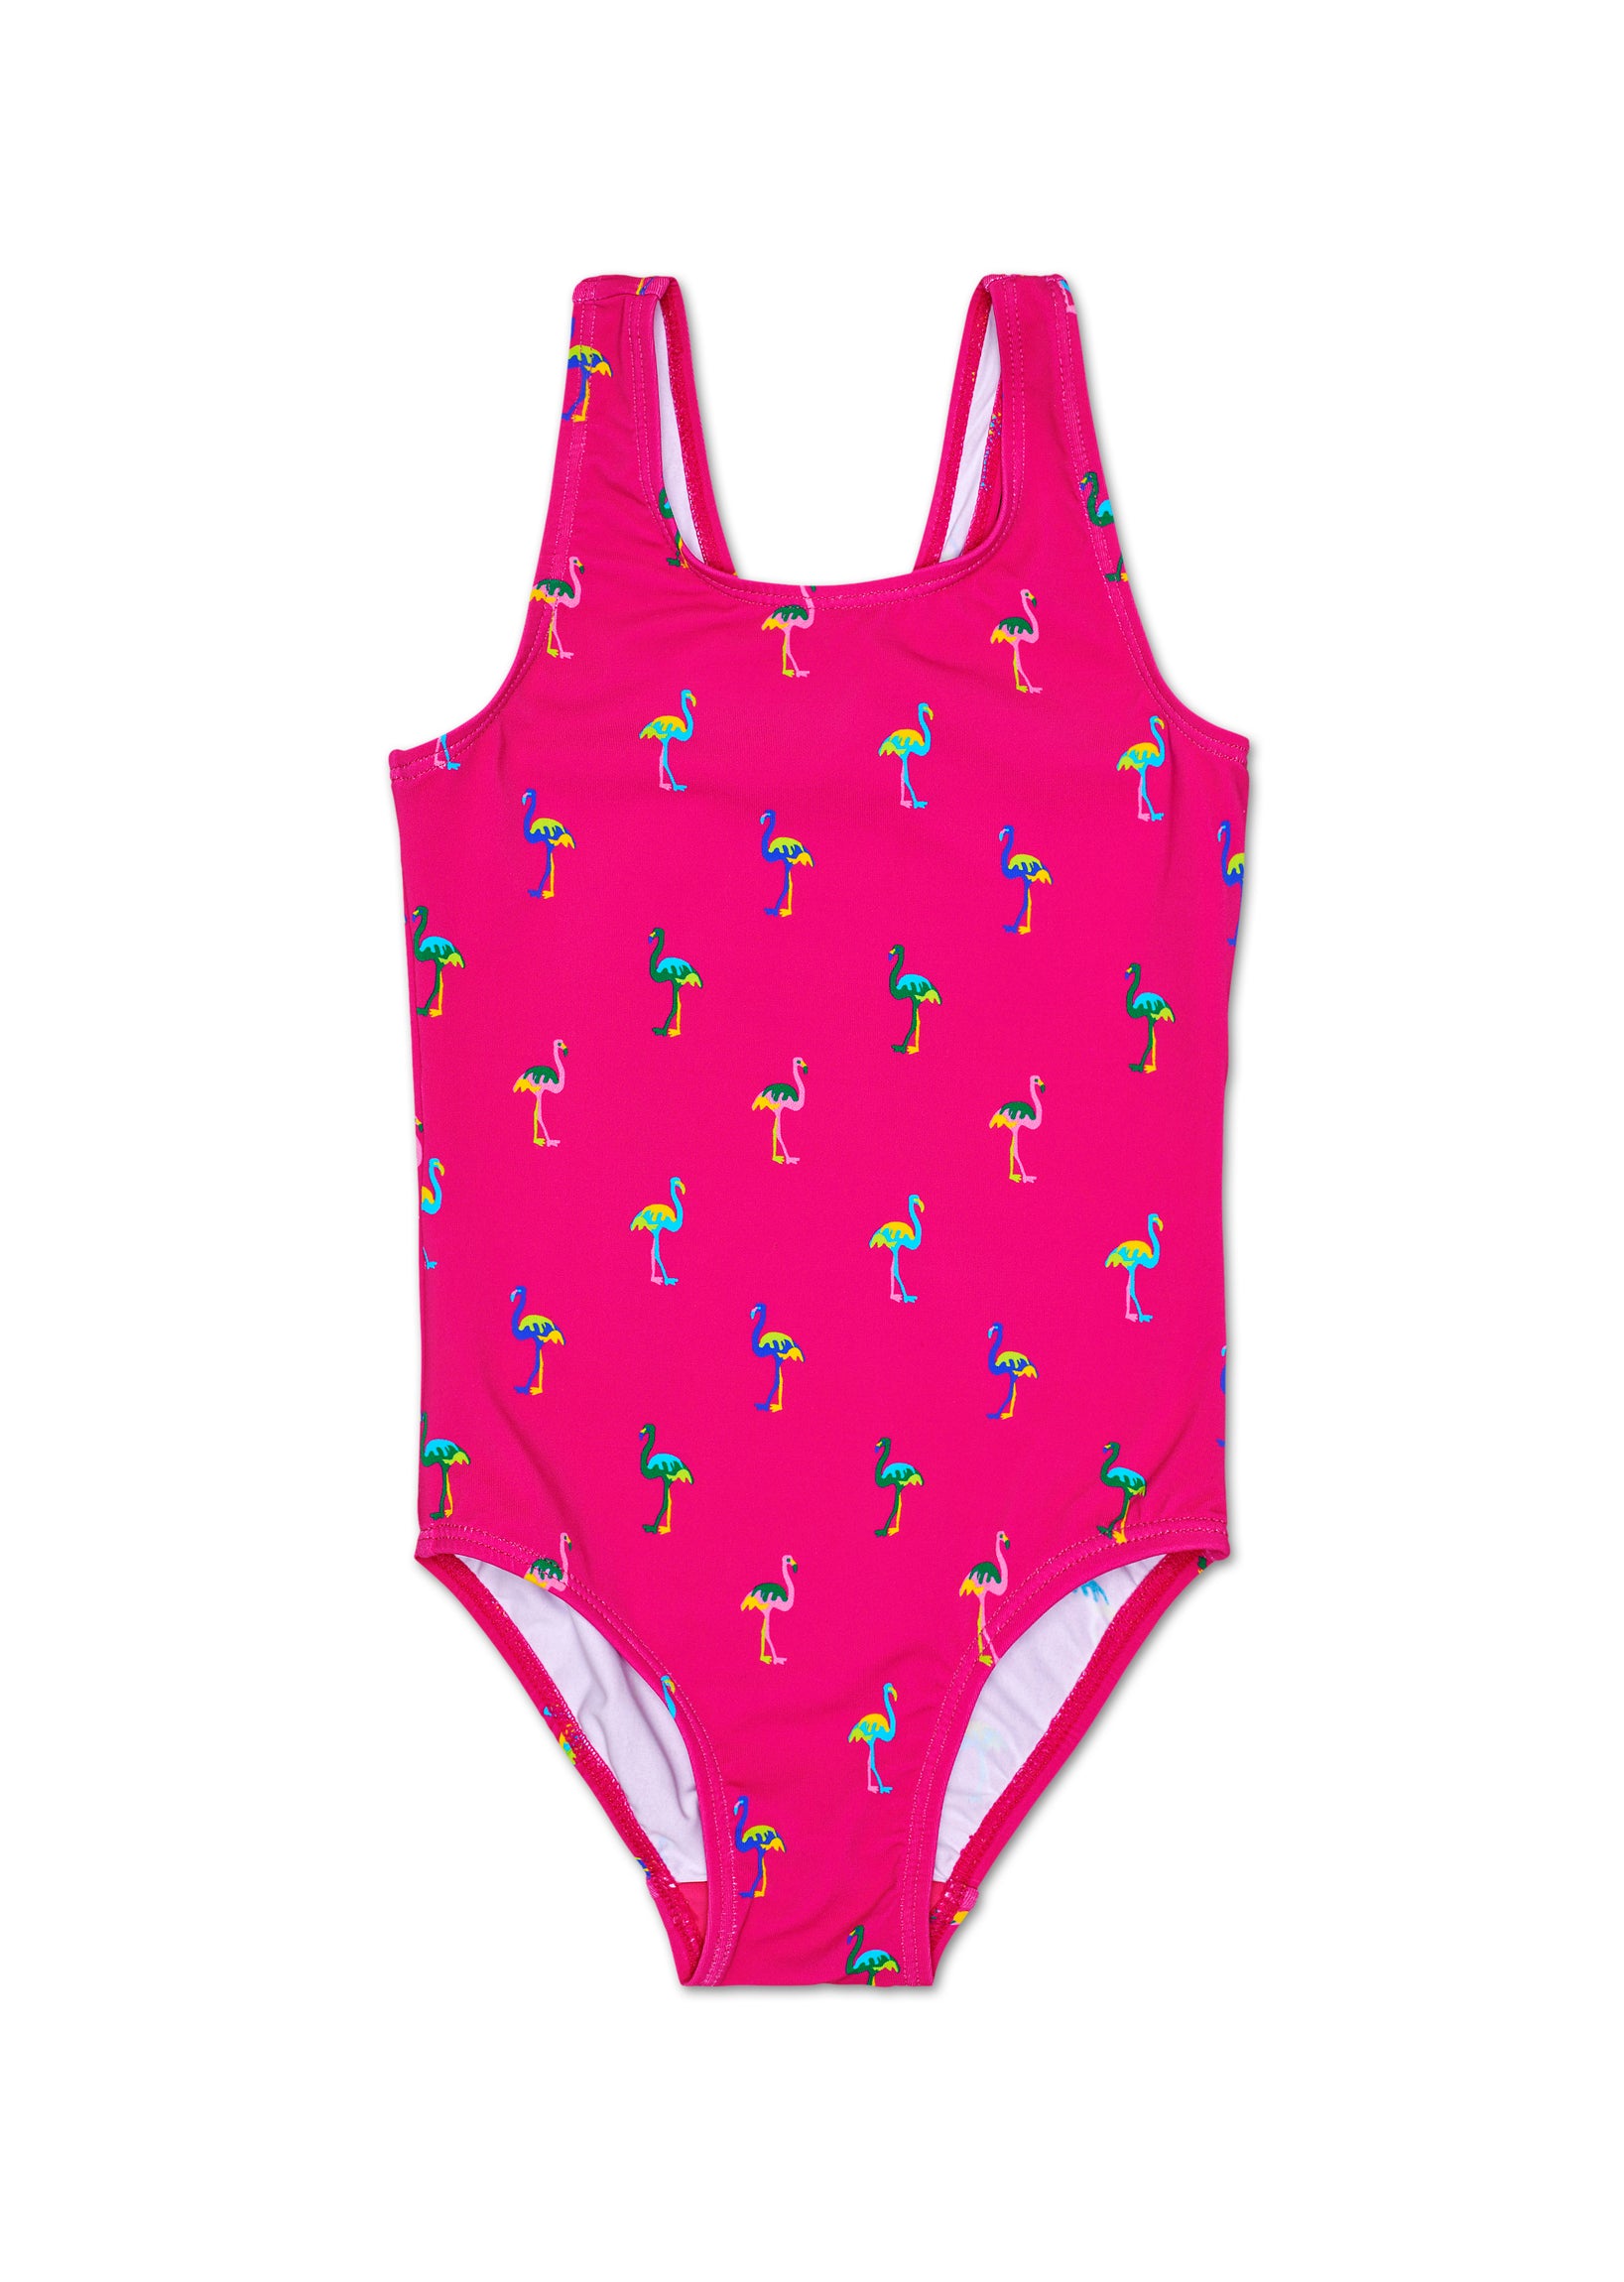 Dětské růžové plavky Happy Socks s plameňáky, vzor Flamingo